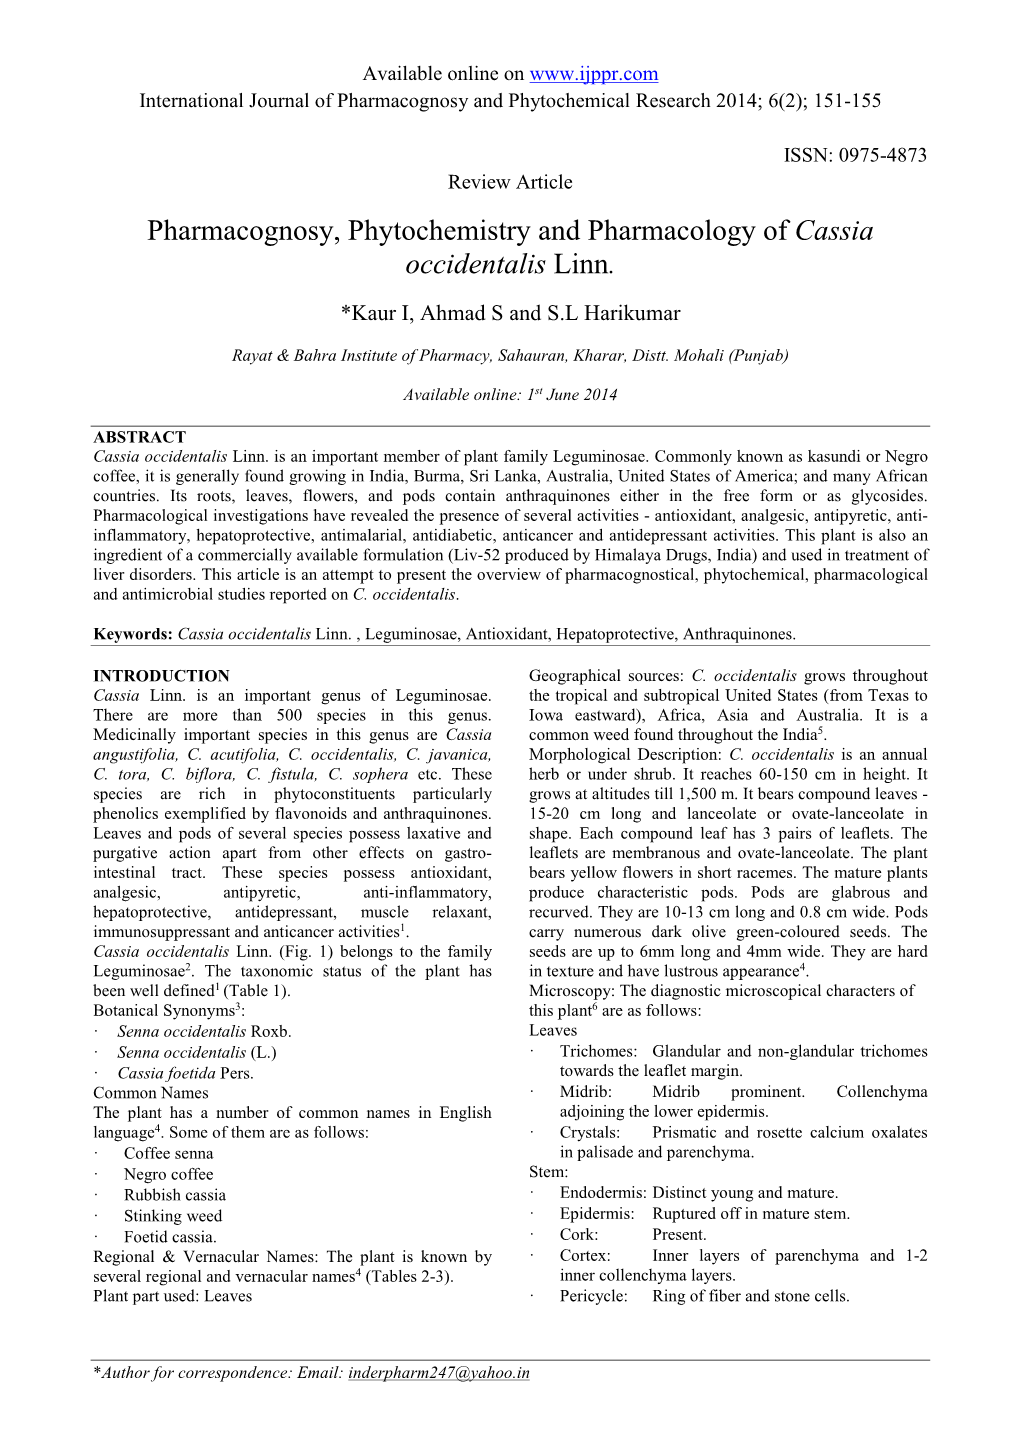 Pharmacognosy, Phytochemistry and Pharmacology of Cassia Occidentalis Linn